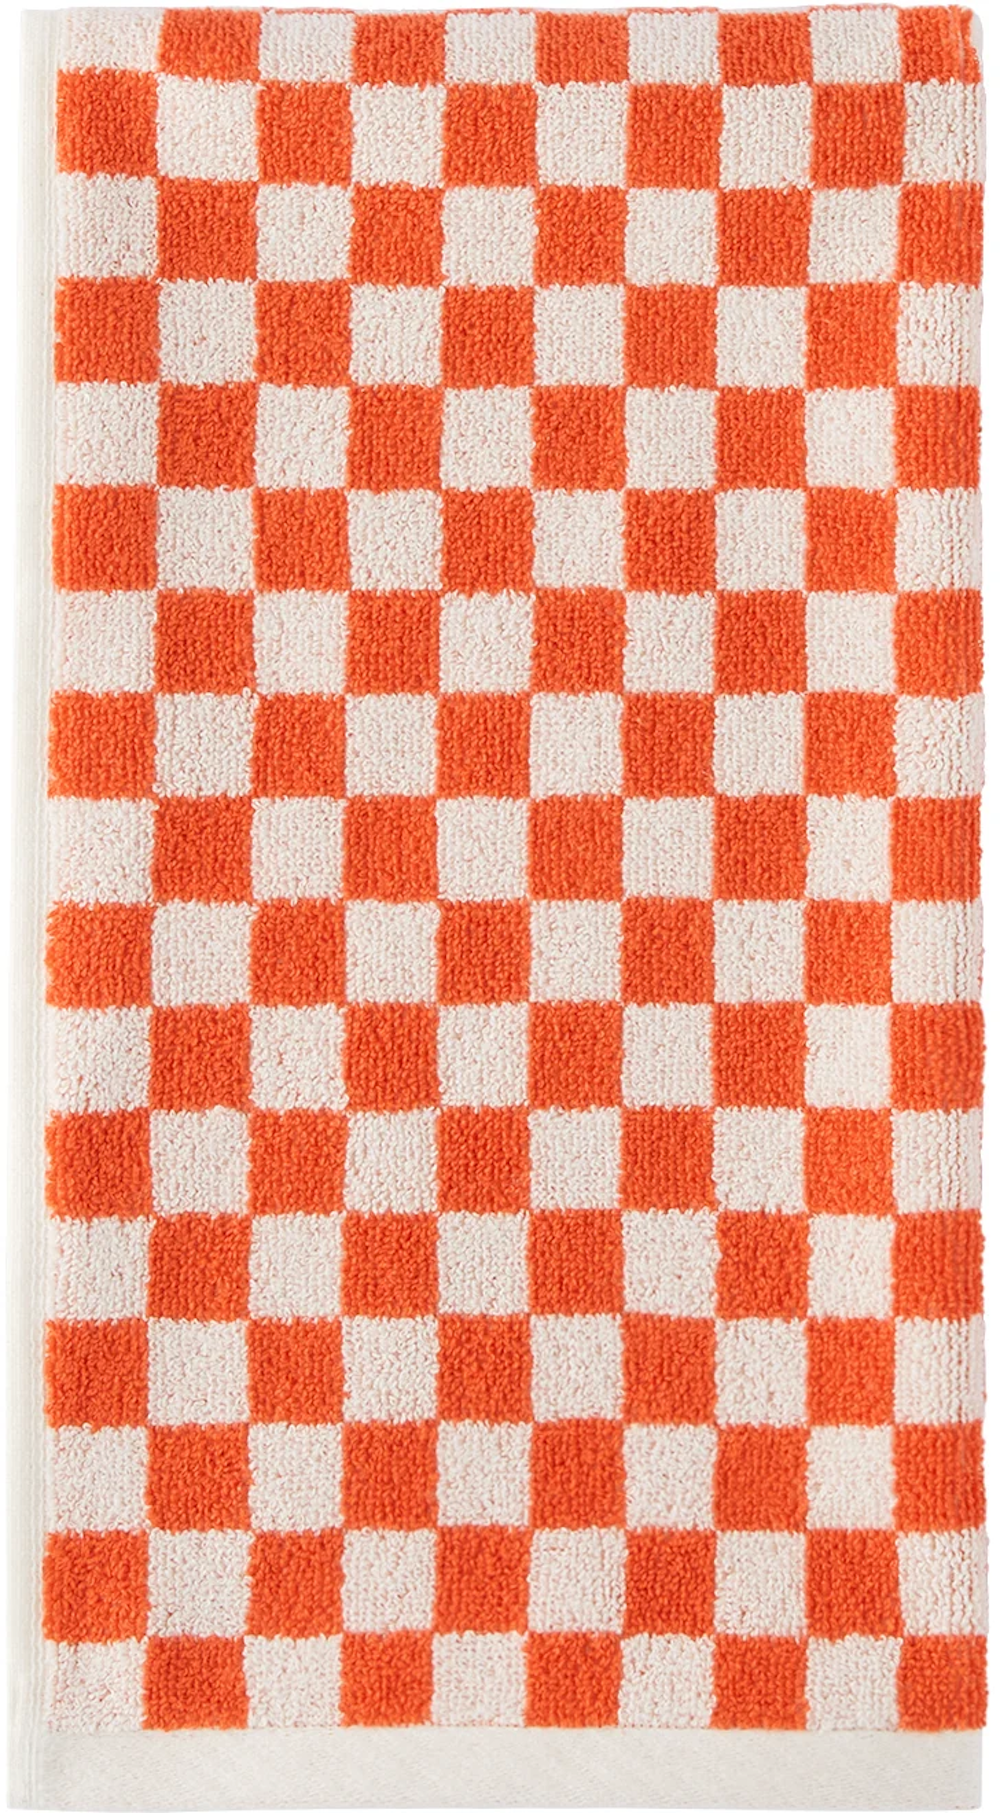 Checkered hand towel